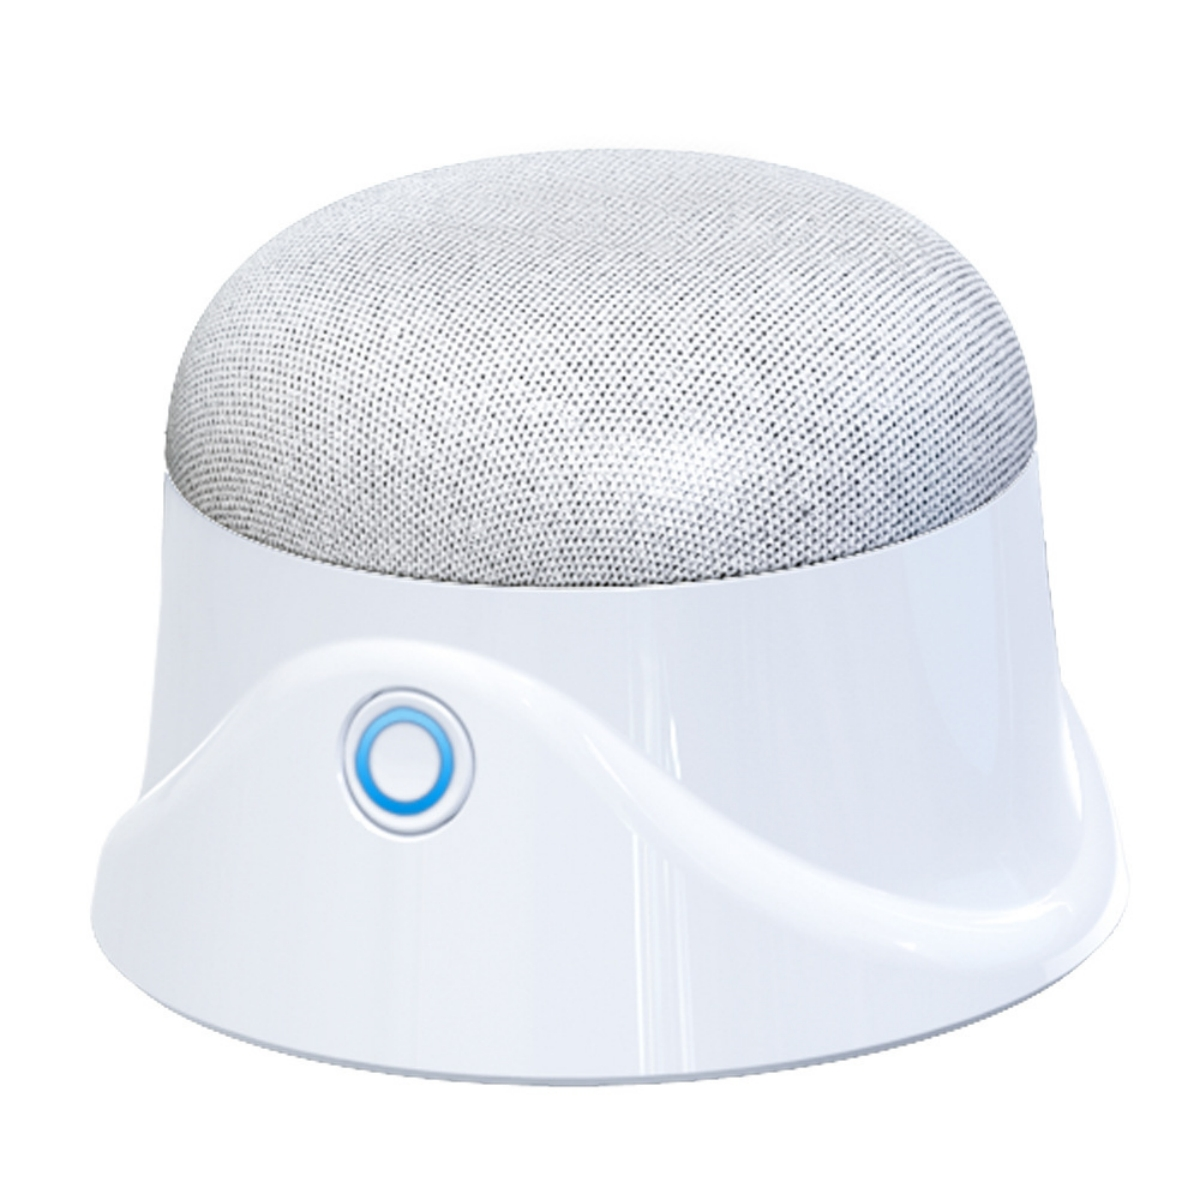 Mini Saftbecher Weiß wiederaufladbar tragbarer SHAOKE Reise-Saftbecher Lautsprecher, Bluetooth elektrisch USB